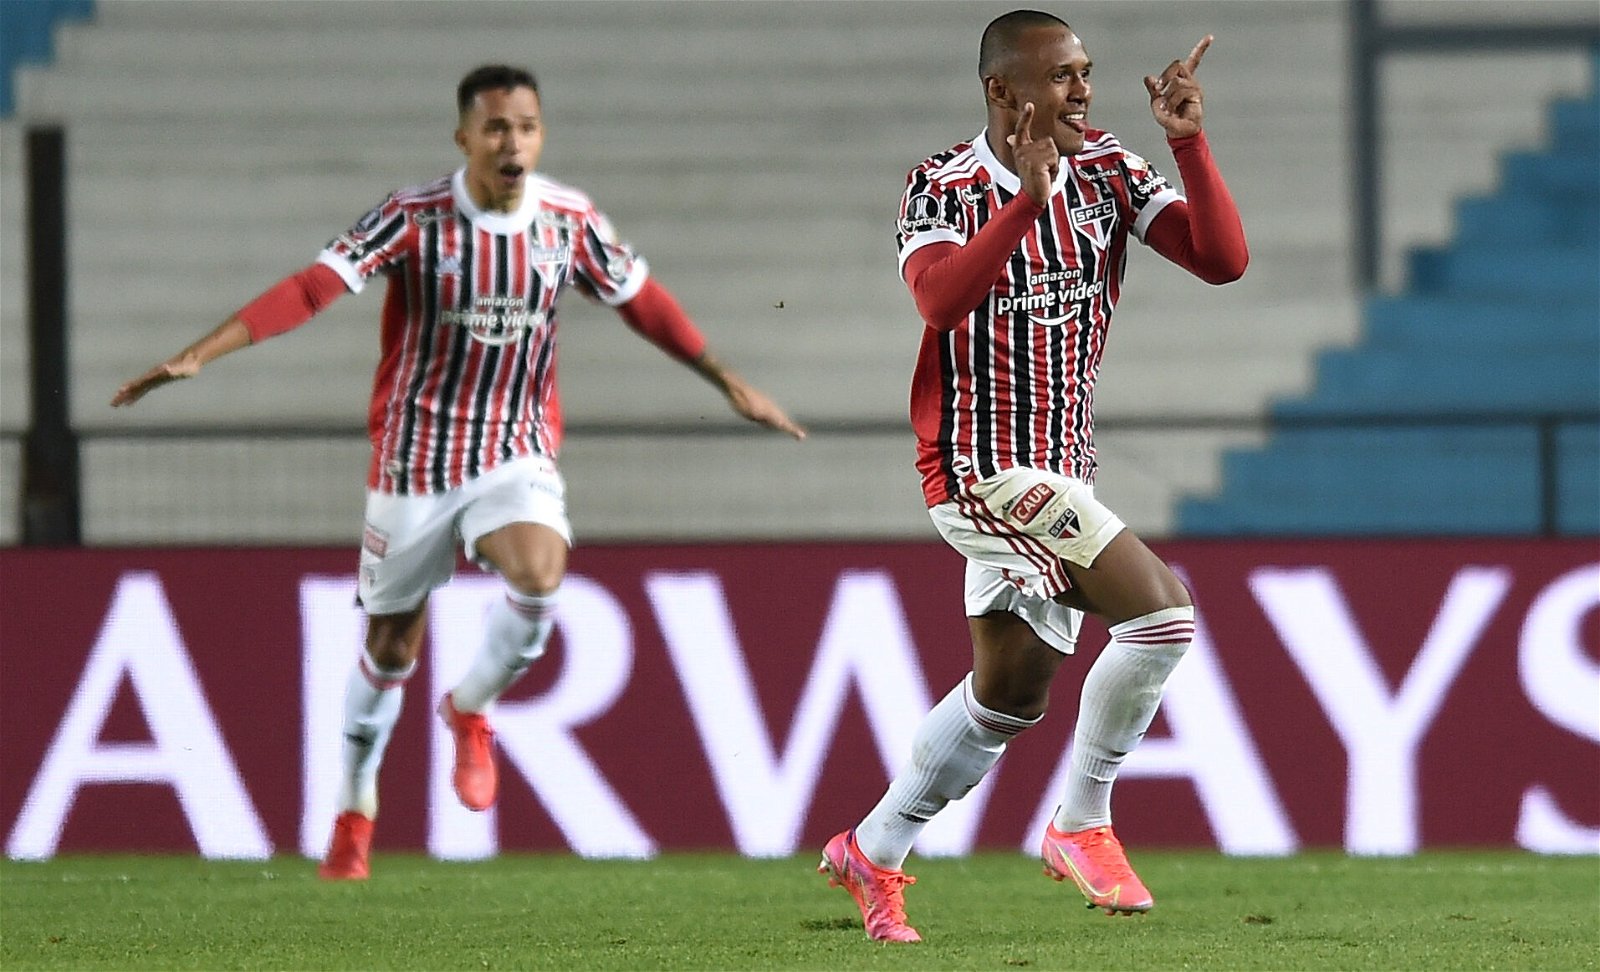 Marquinhos-celebrates-scoring-for-Sao-Paulo-against-Racing-Club